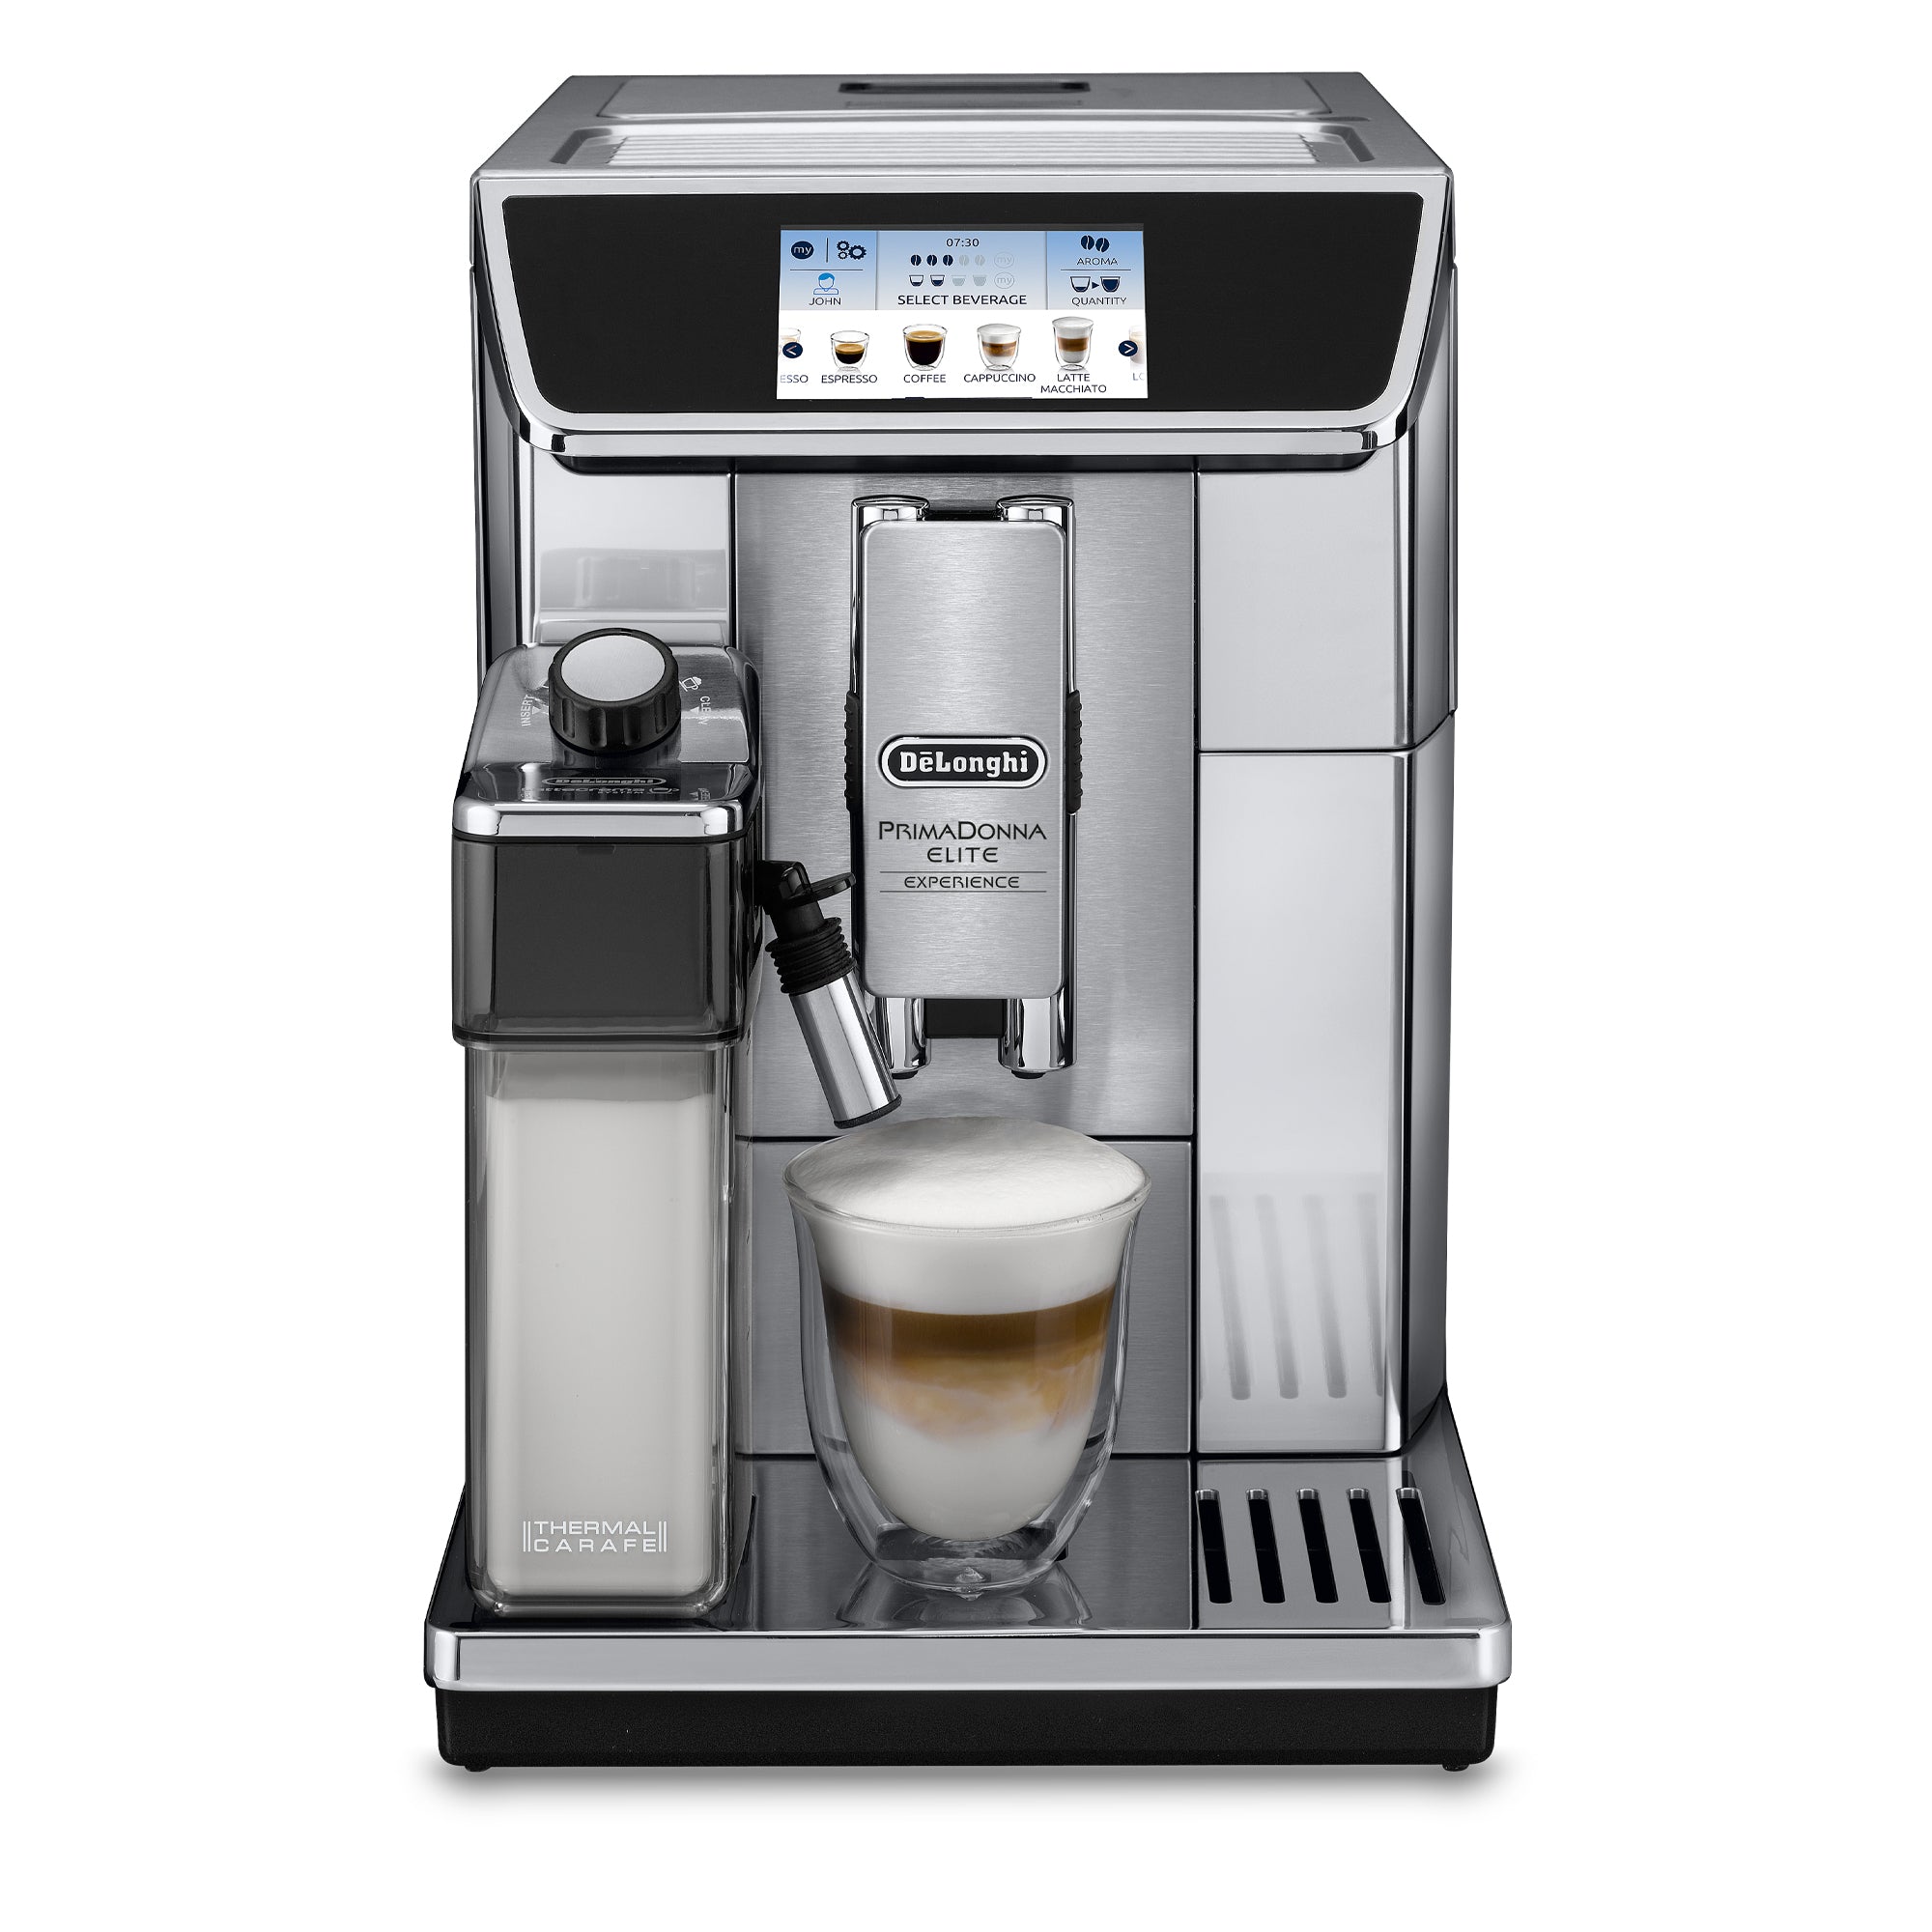 B Coffee Co Coffee Machine Review